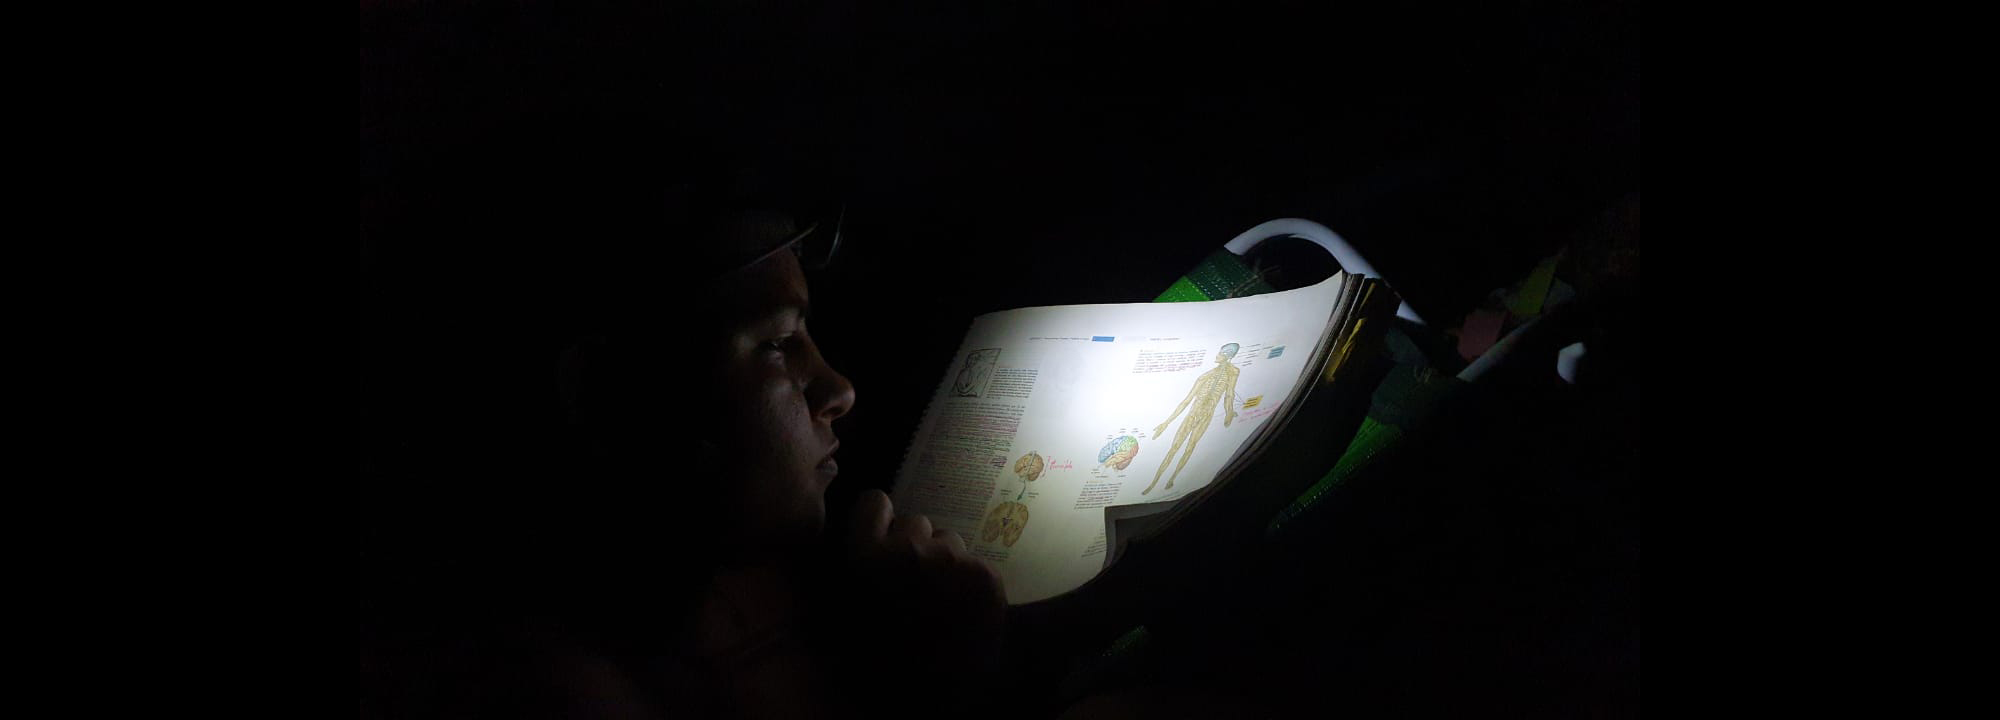 Juma Xipaia estuda durante a noite